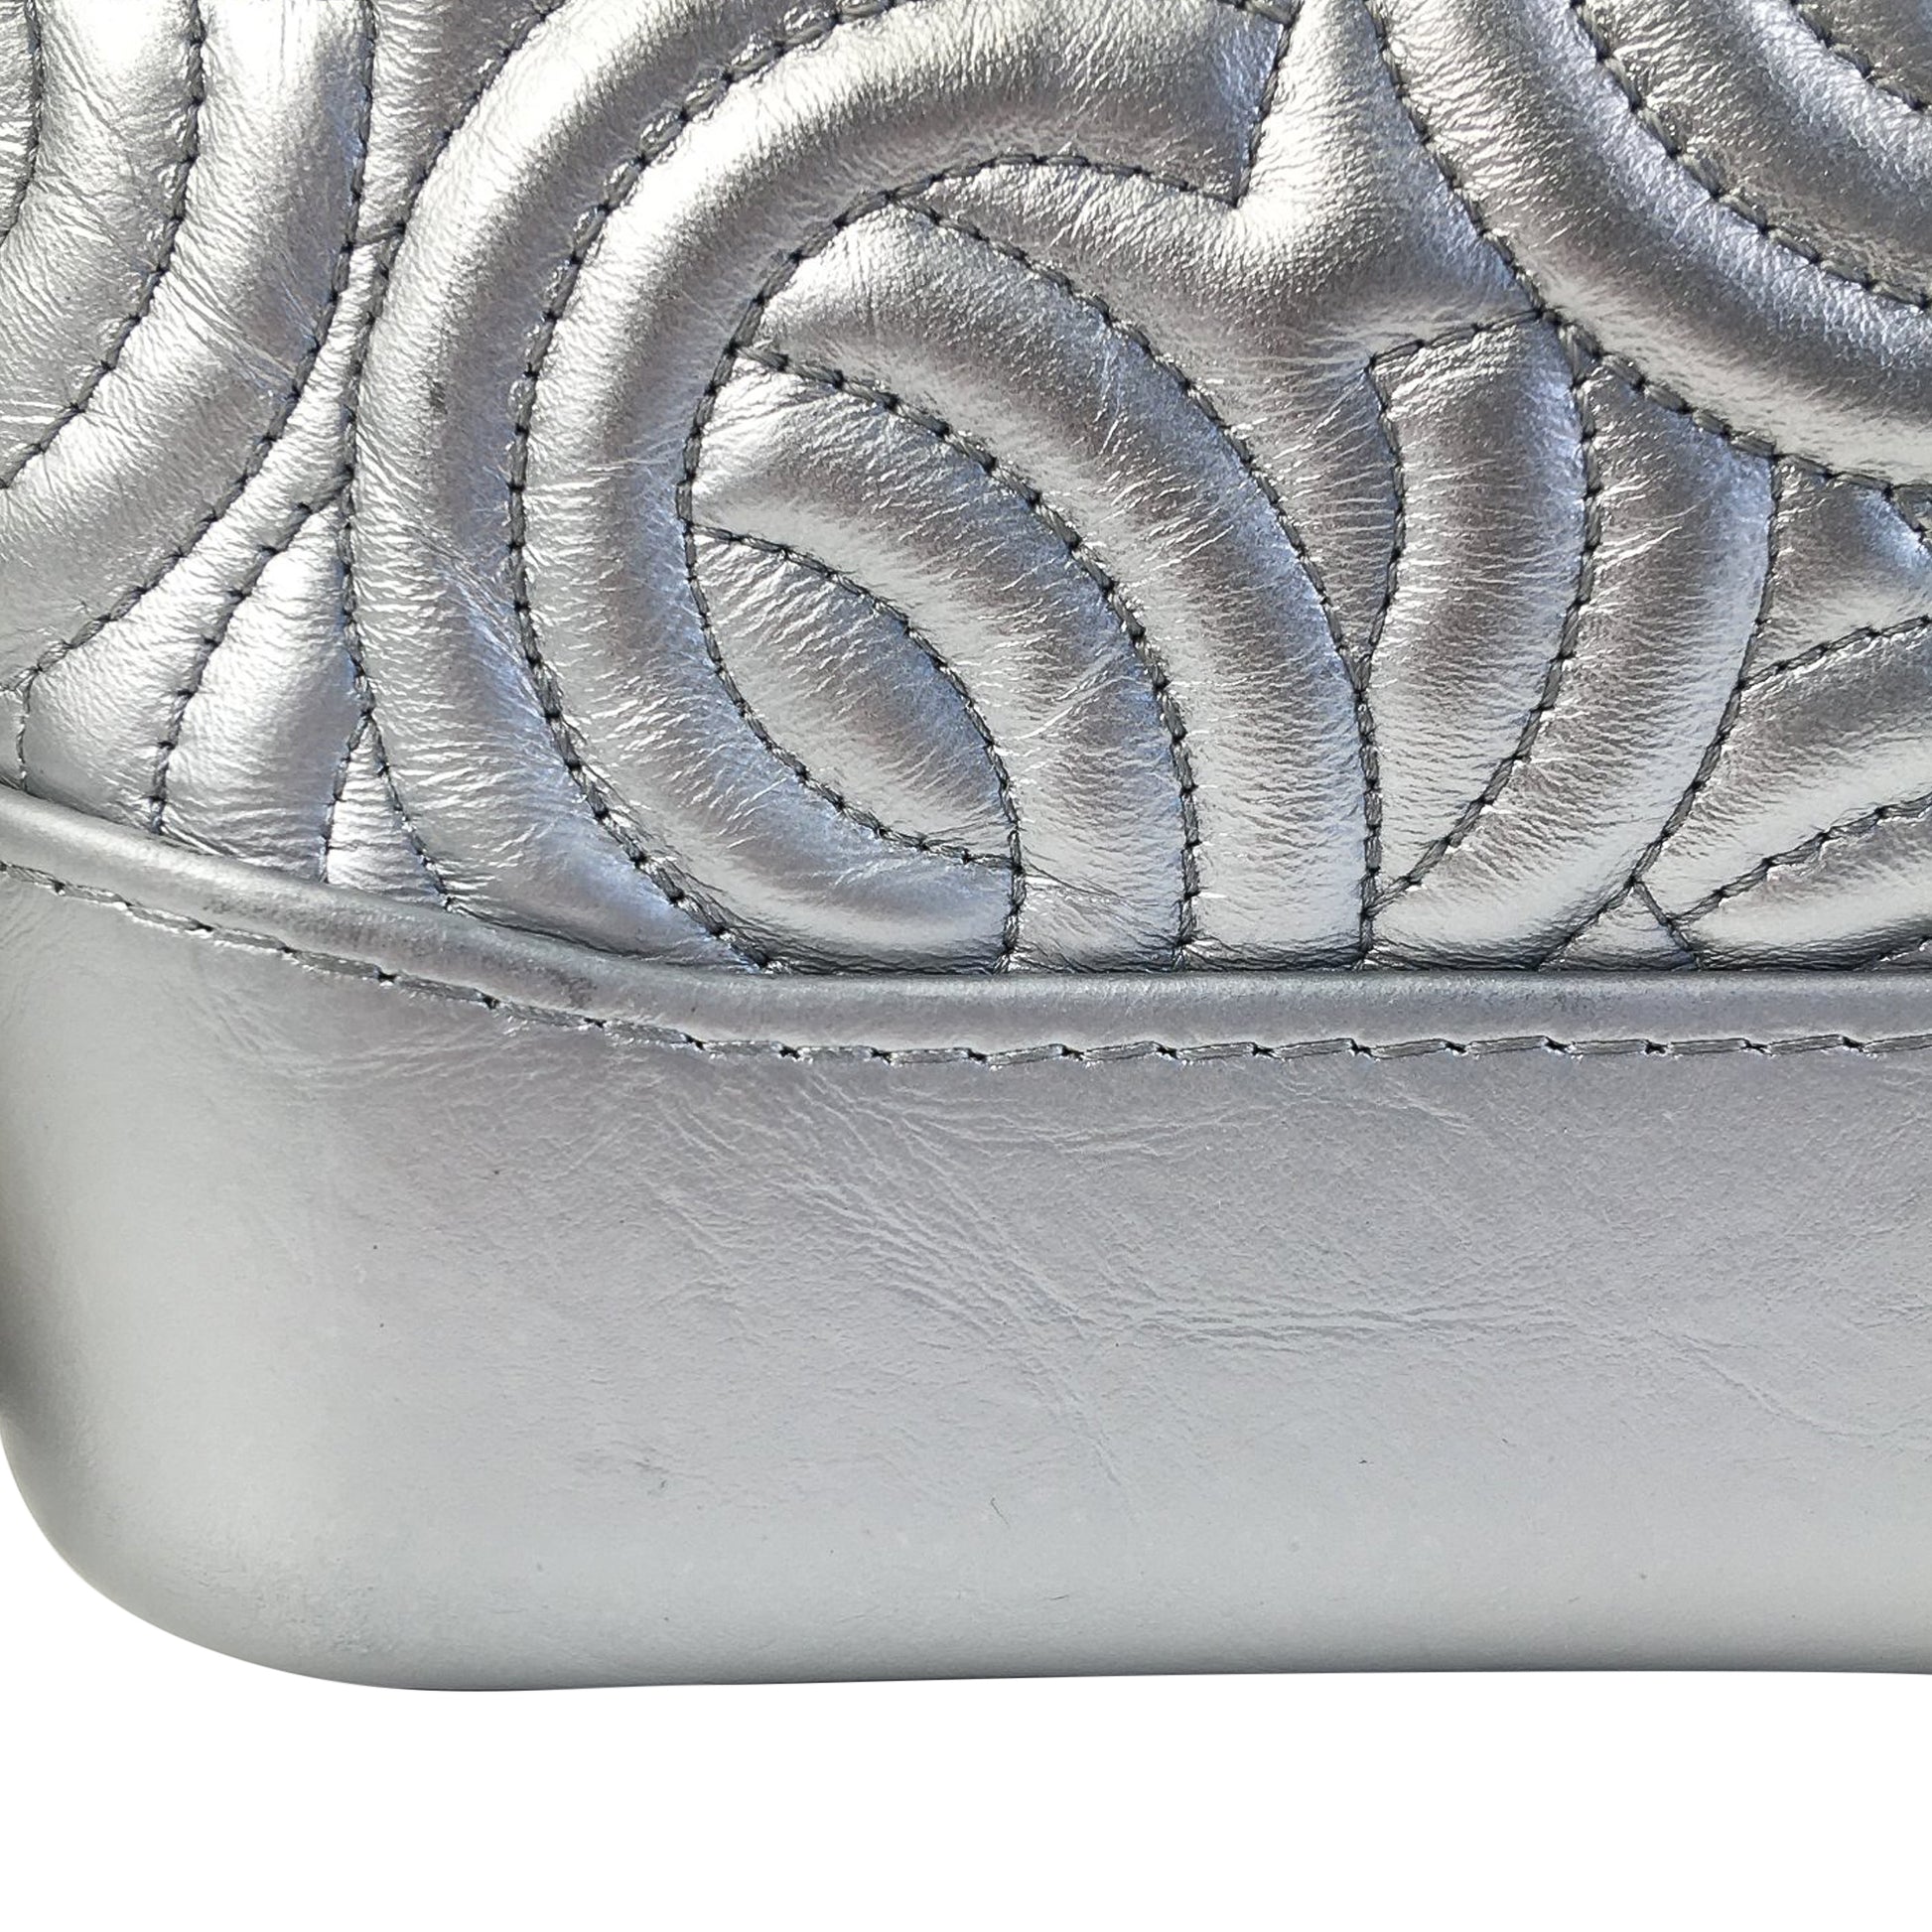 Small CC Stitched Calfskin Gabrielle Crossbody Bag Silver - Gaby Paris